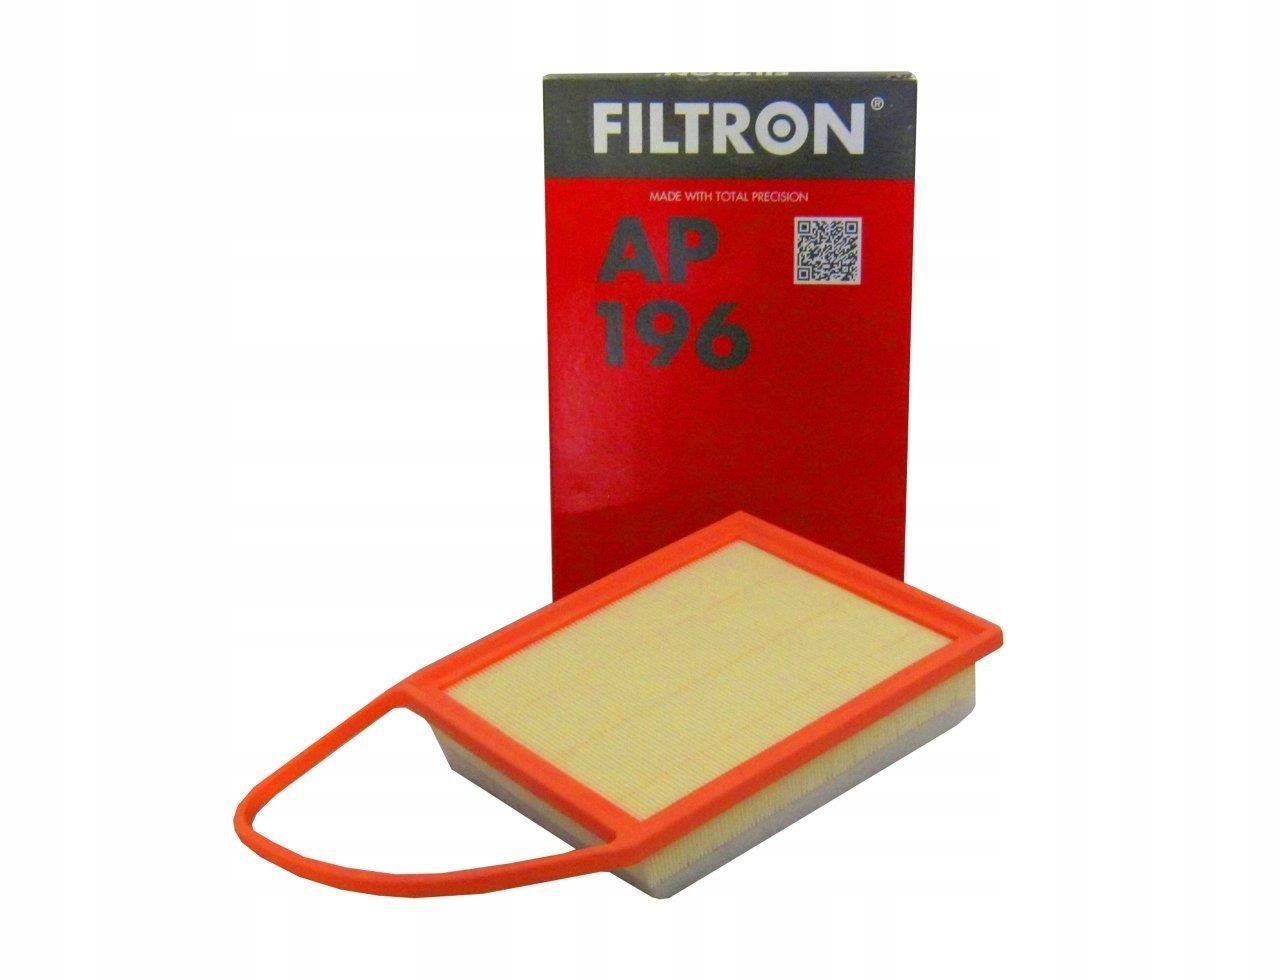 Citroen C5 1.6 Hdi Dizel Euro5 Hava Filtresi Filtron Marka